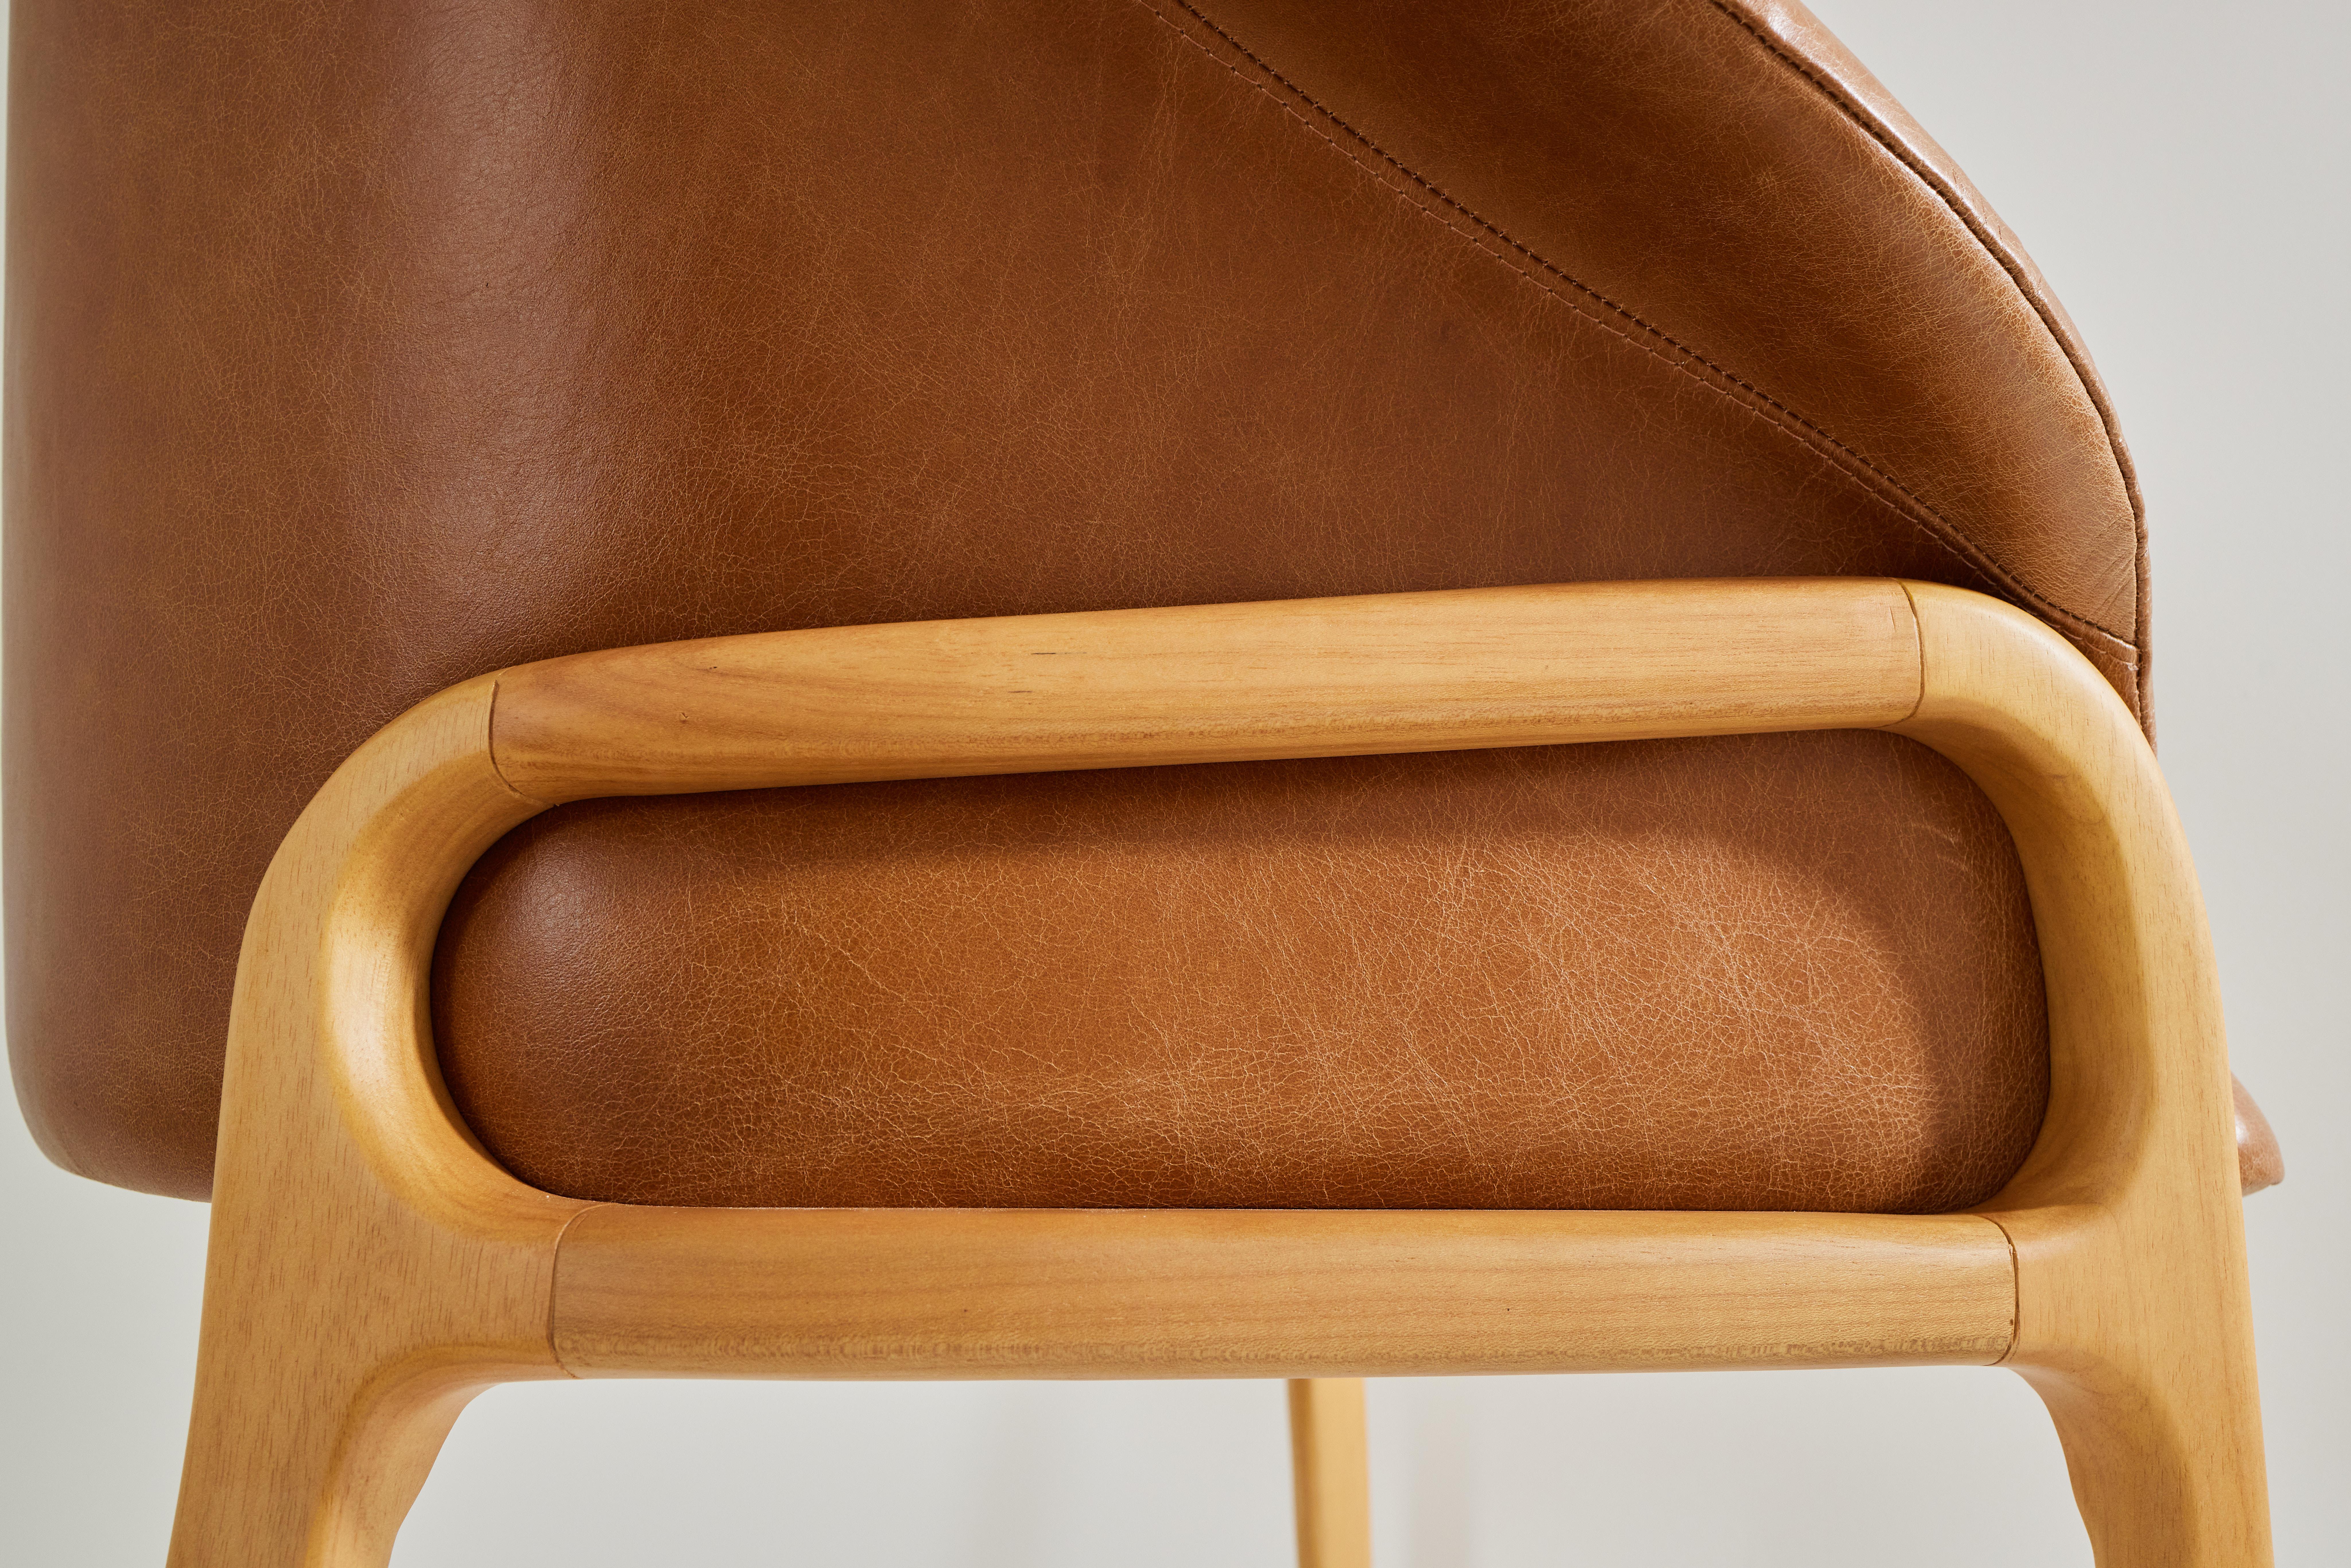 Cuir Chaise organique minimaliste en bois massif, cuir camel ton siège en vente